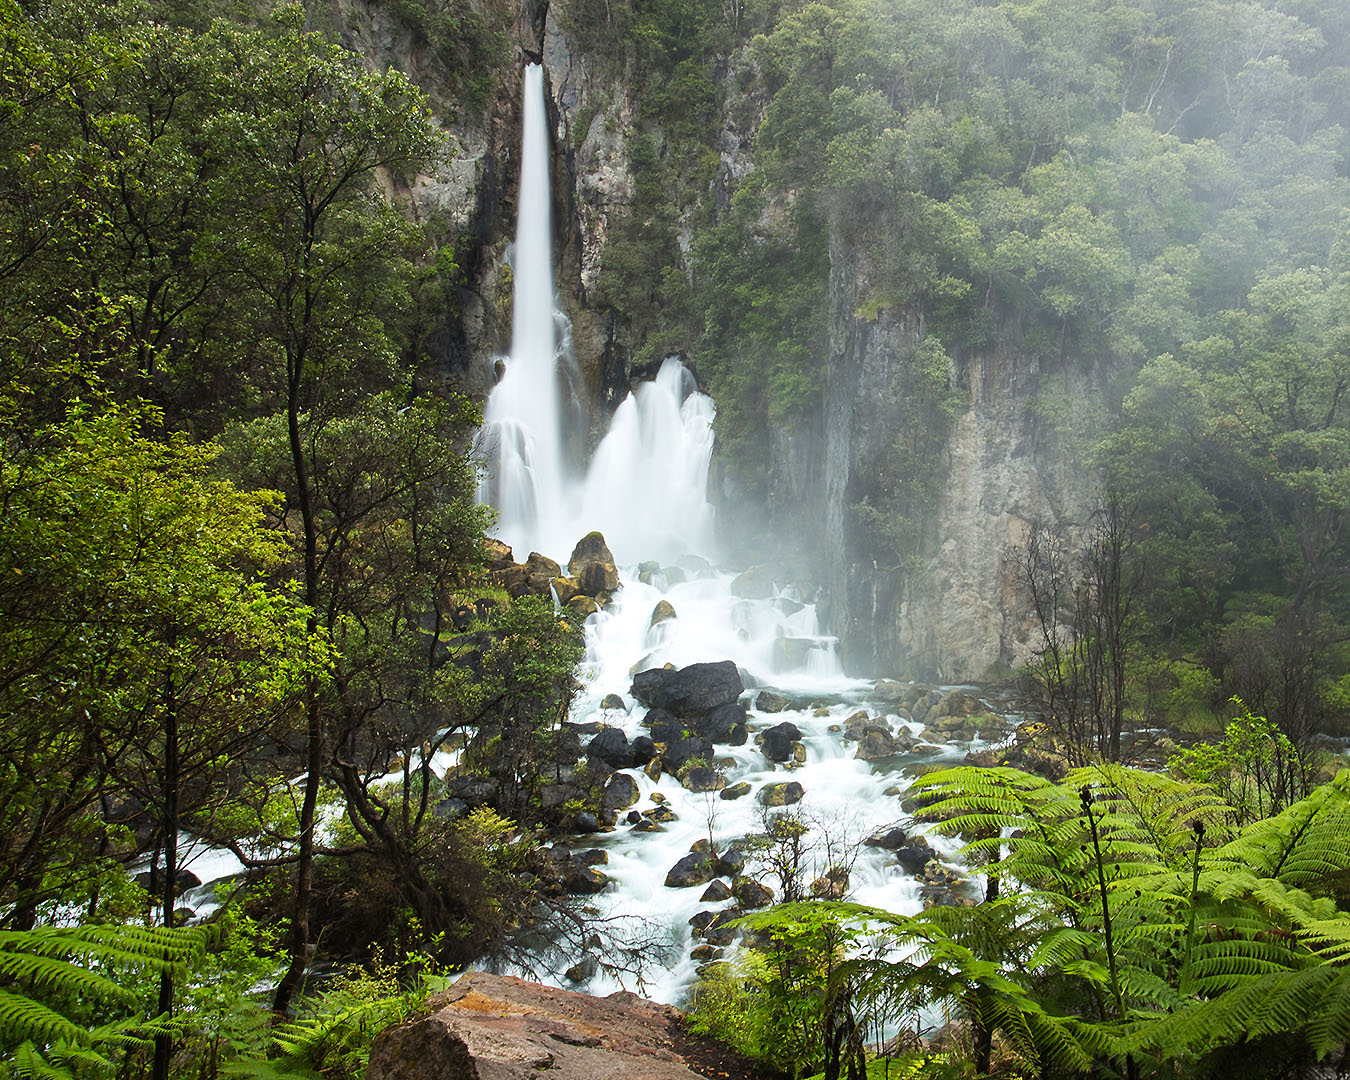 Beautiful Tarawera Falls are seen amongst dense green bush.